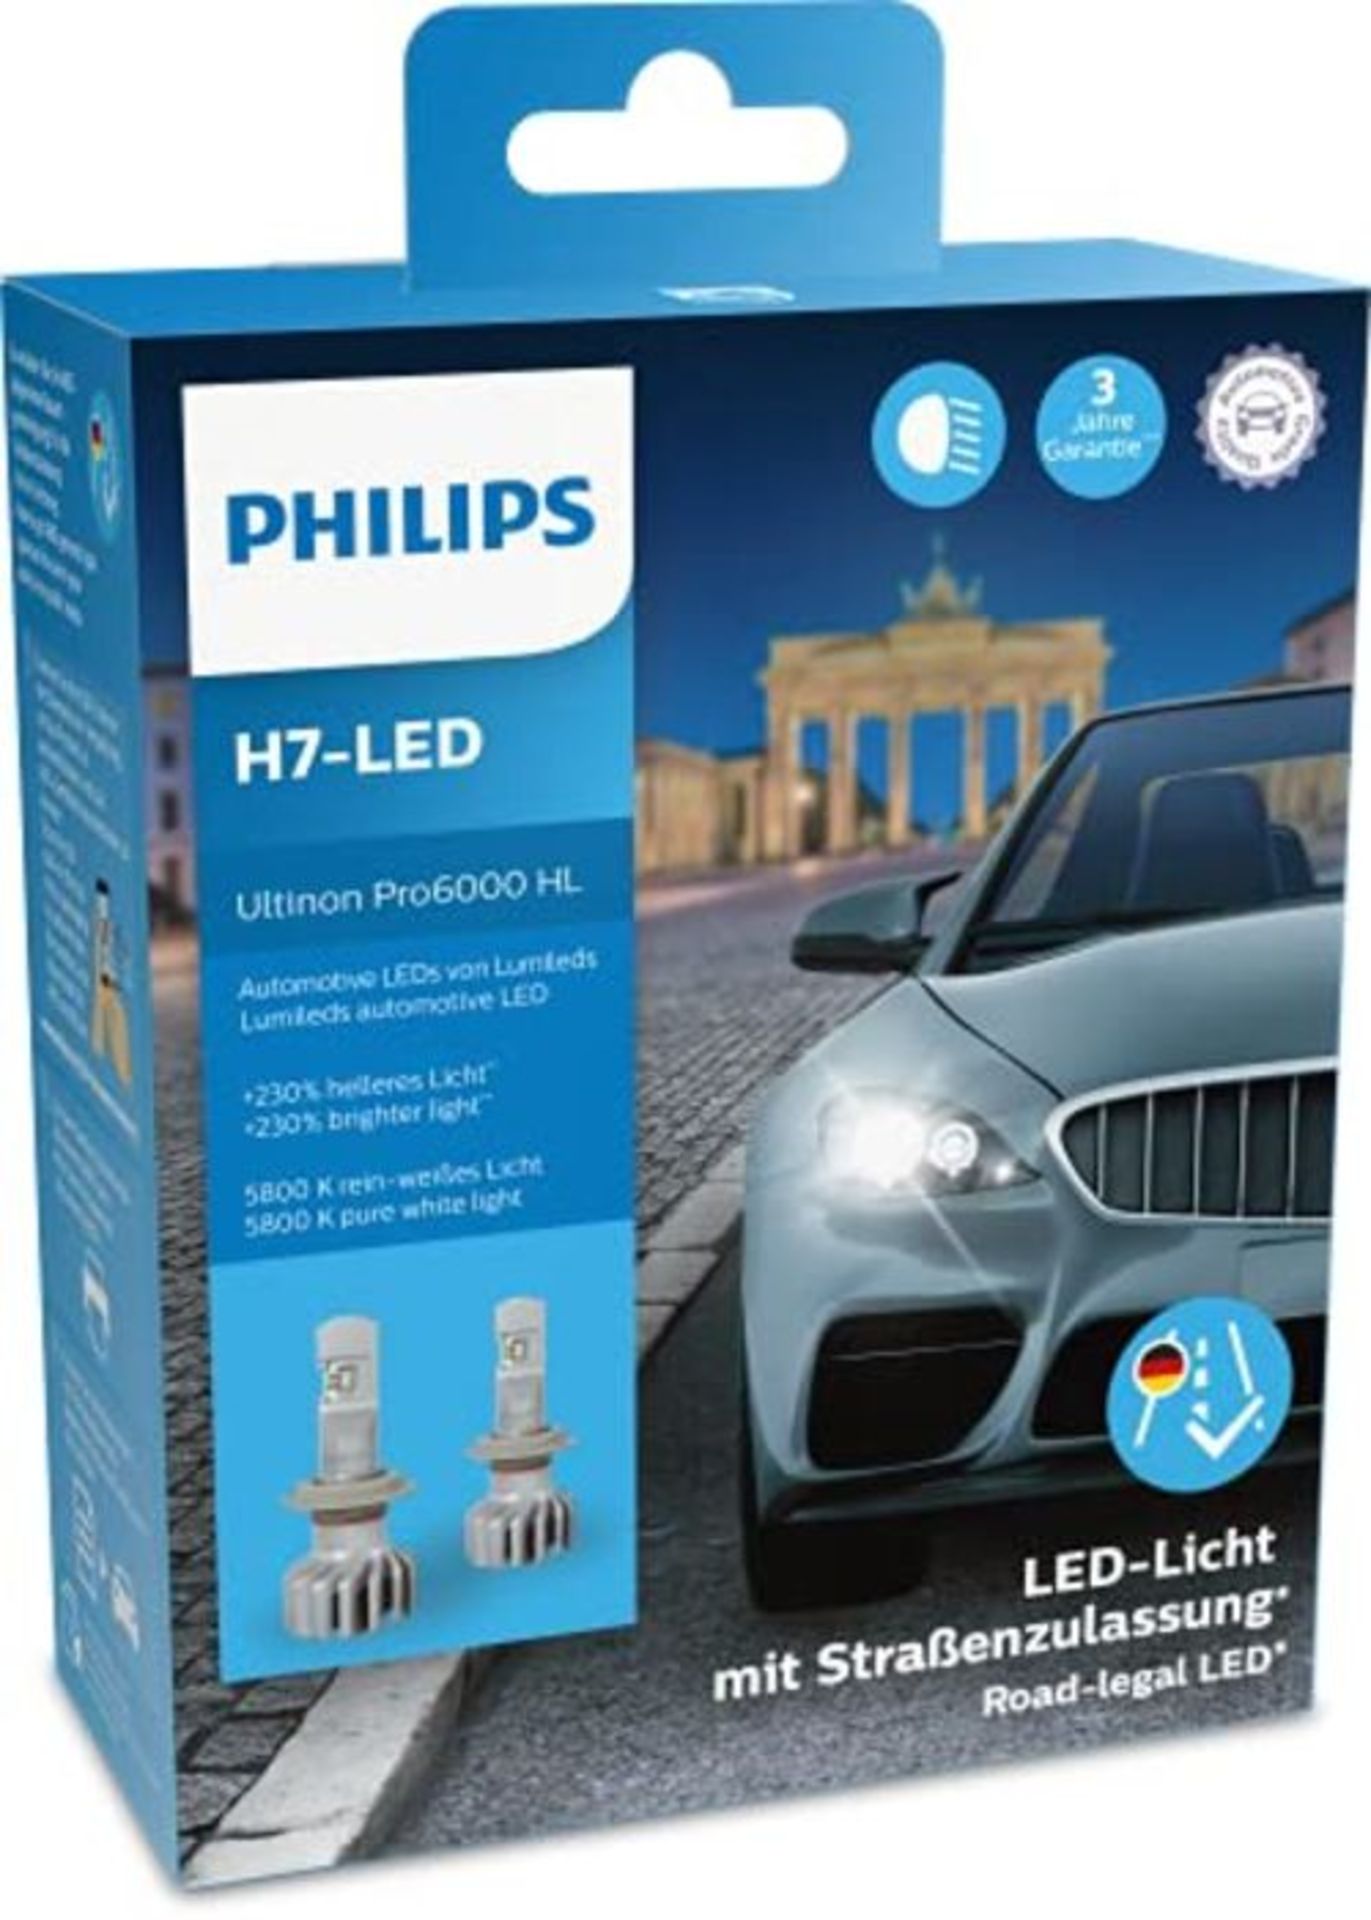 RRP £110.00 Philips Ultinon Pro6000 H7-LED Scheinwerferlampe mit Stra?enzulassung, +230% helleres